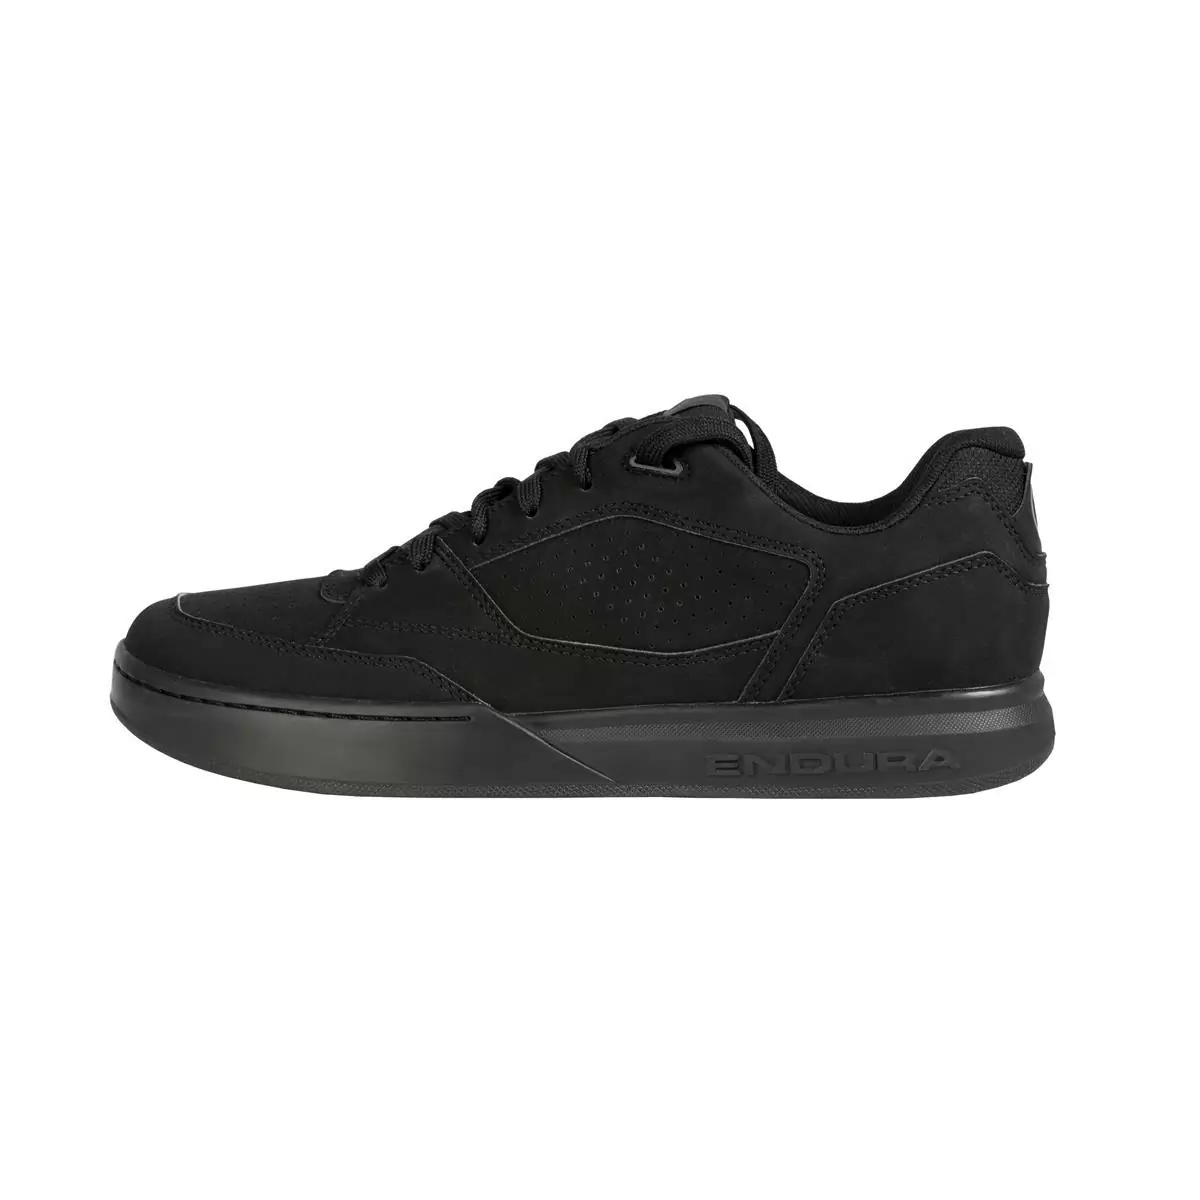 Hummvee Flat Pedal Shoes Black Size 47 #1